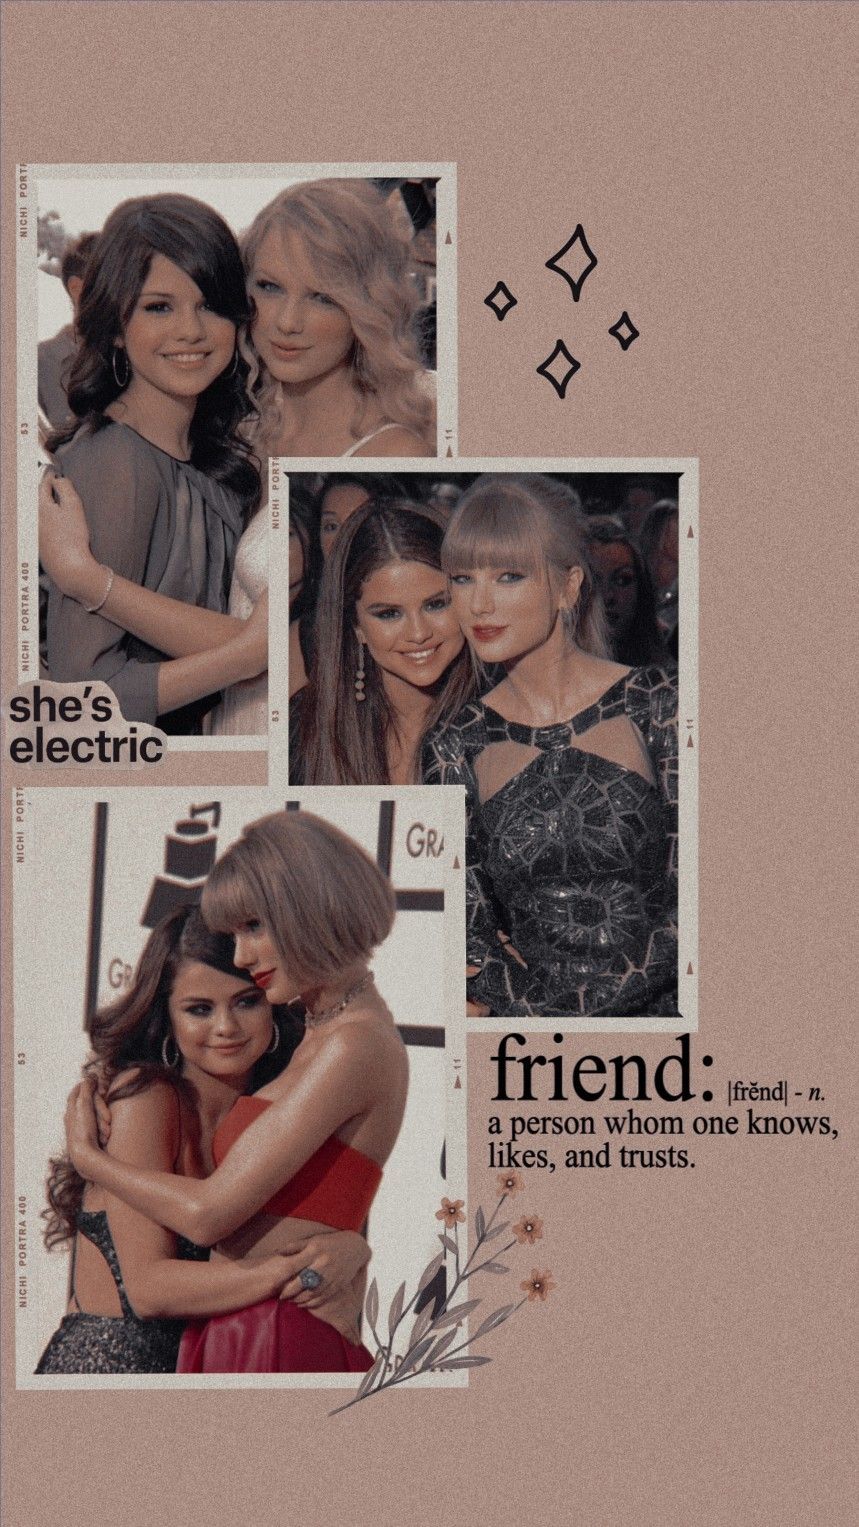 Taylor Swift and Selena Gomez Wallpaper. Taylor swift album, Selena gomez wallpaper, Selena gomez